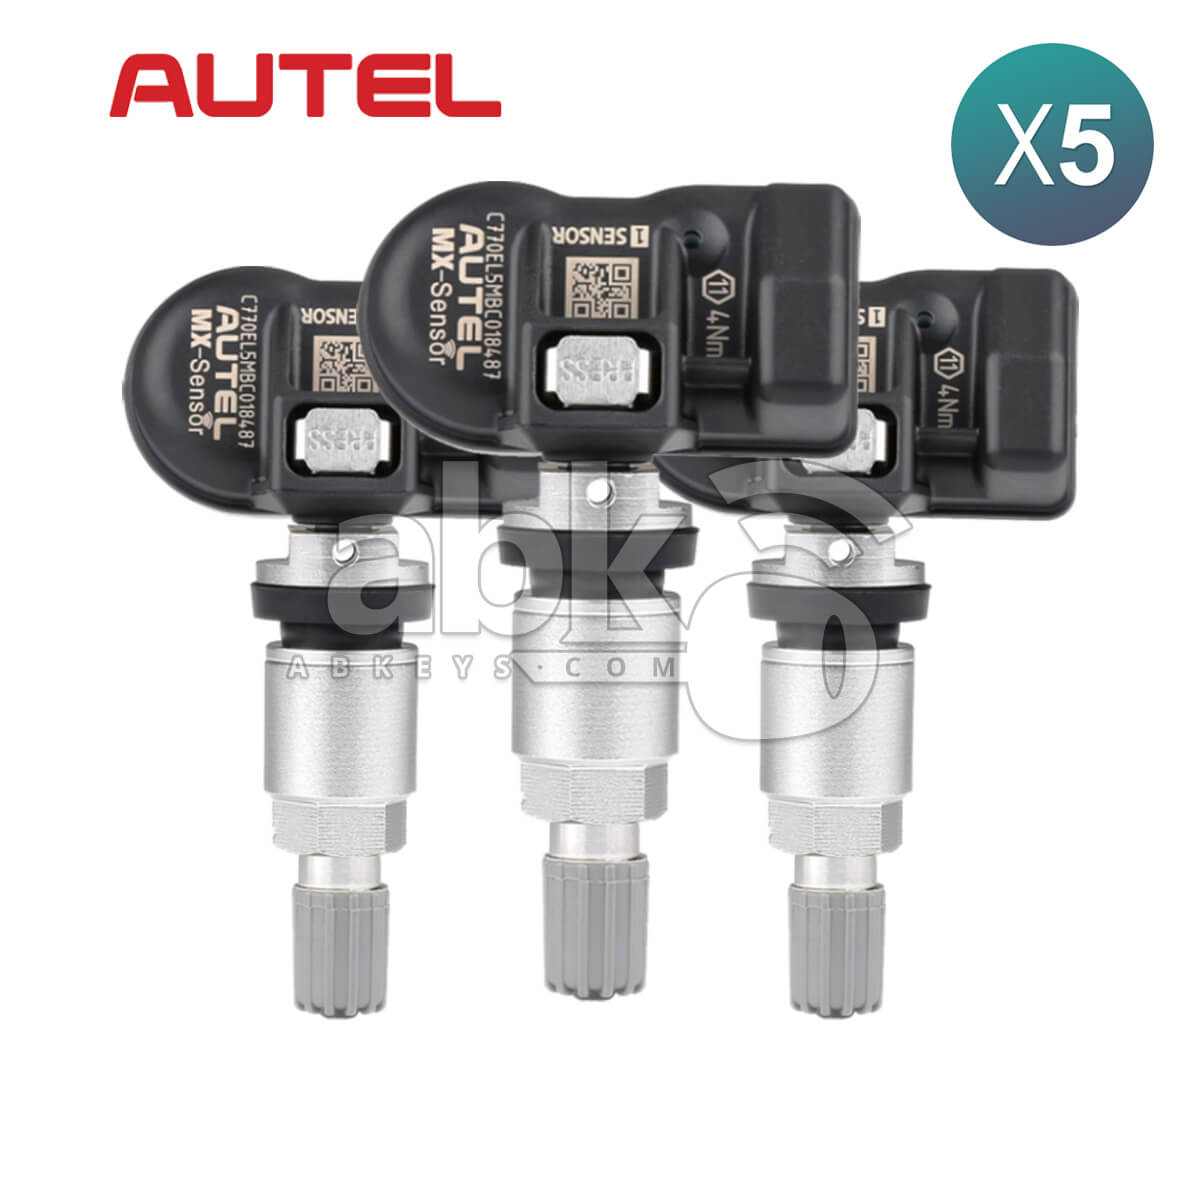 Autel TPMS Sensor MX-Sensor Dual Frequency (315MHz + 433MHz) Press-in  OE-Level Universal Programmable TPMS Sensors for Tire Pressure (Press-in  Metal